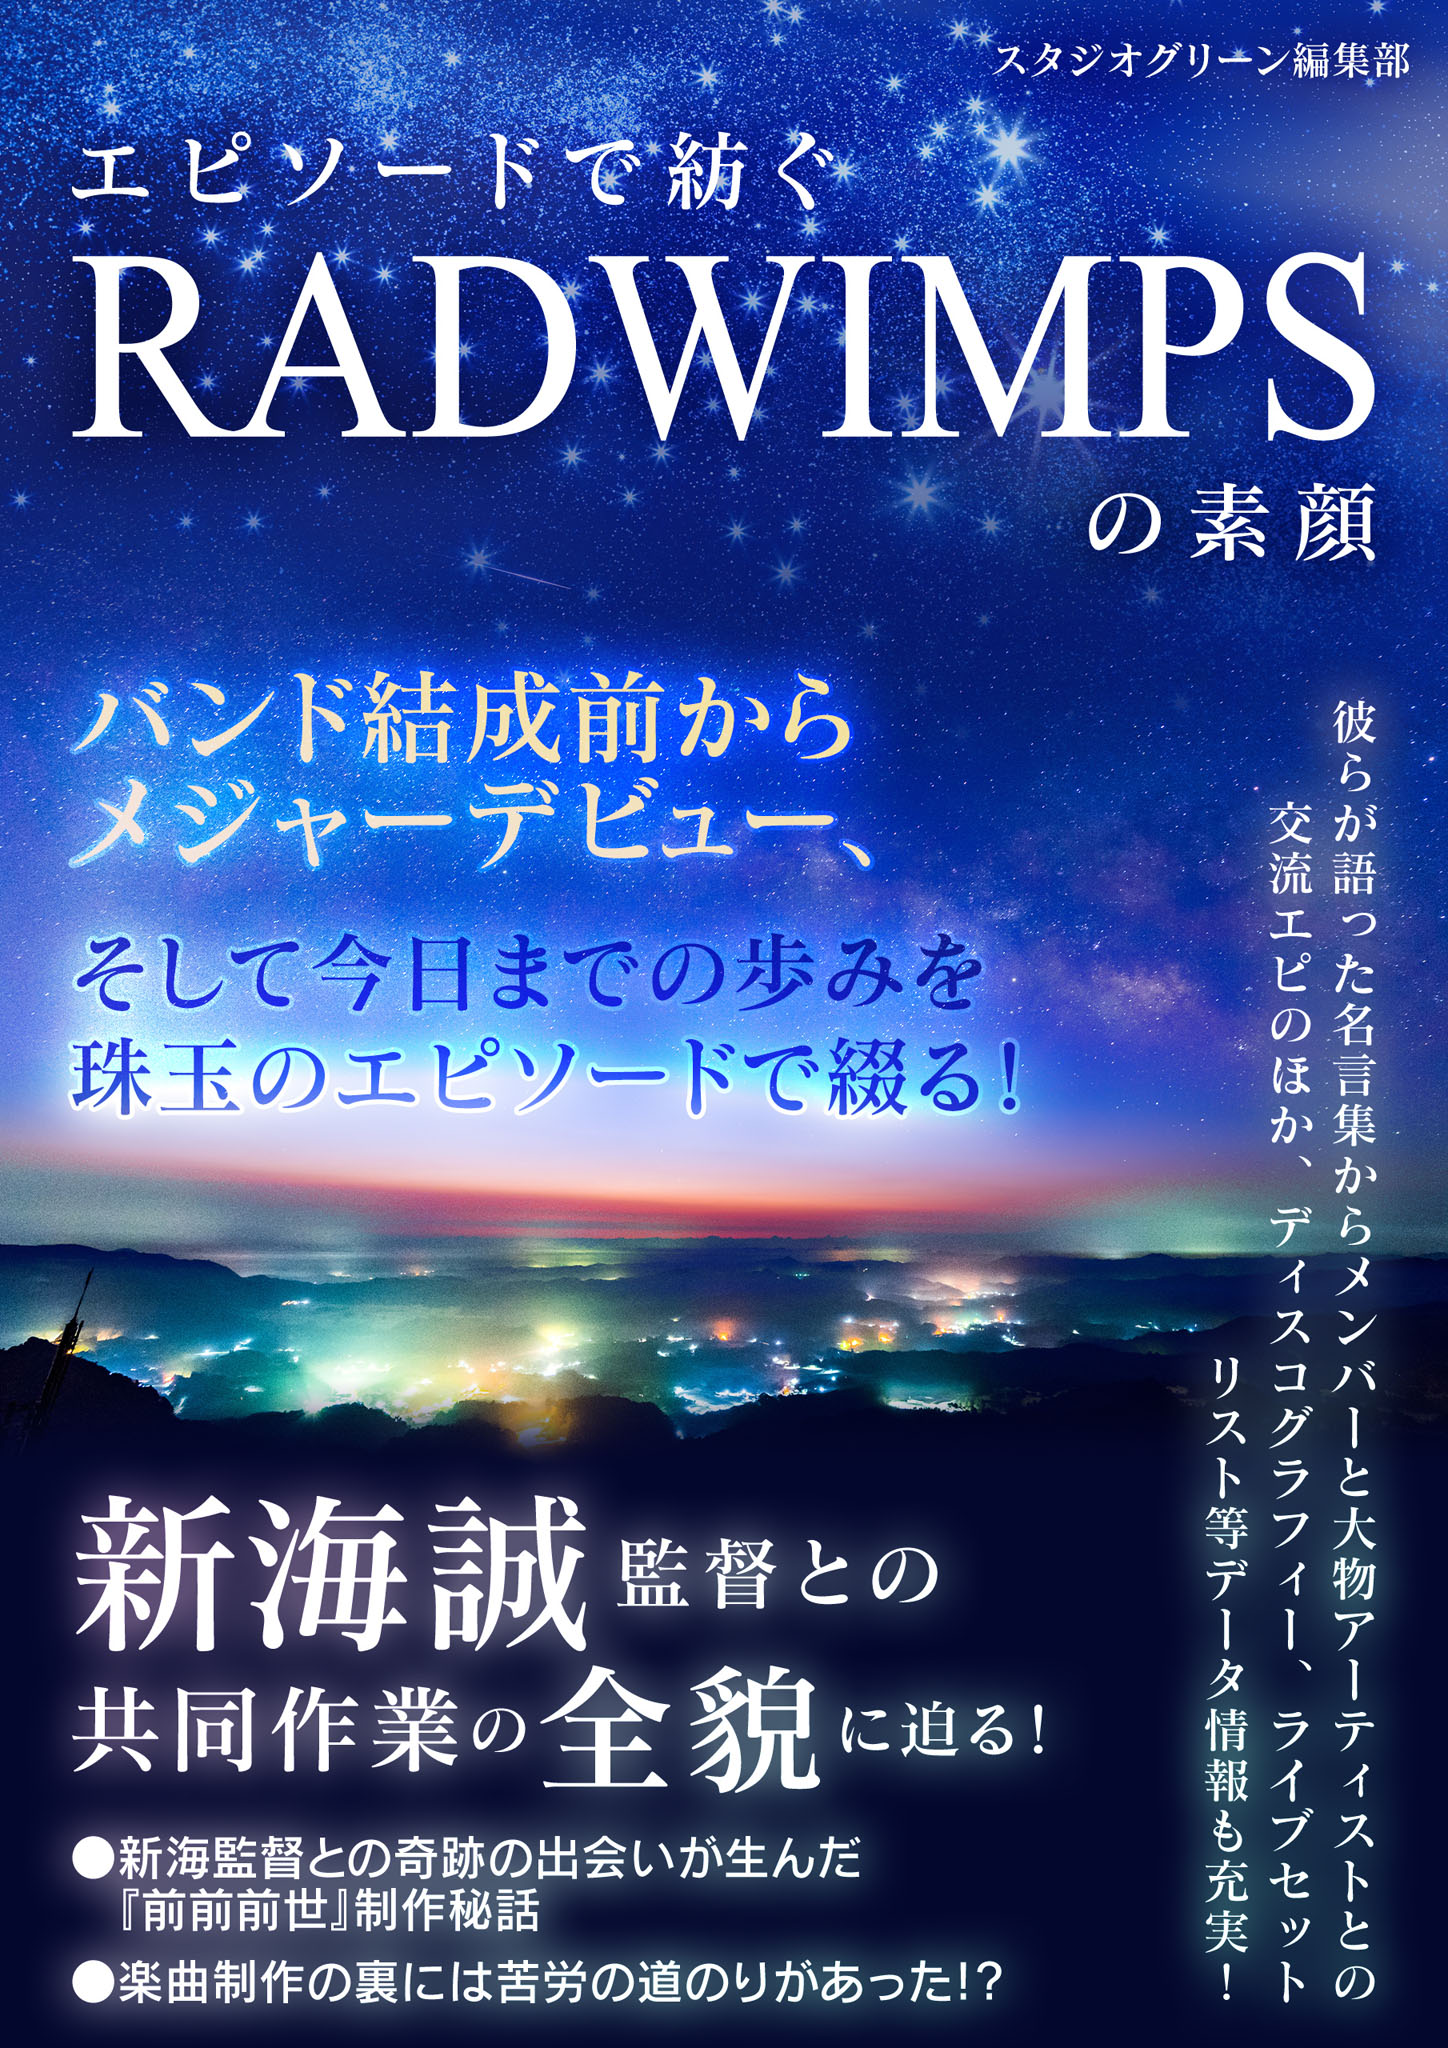 RADWIMPS 全楽曲セット - CD